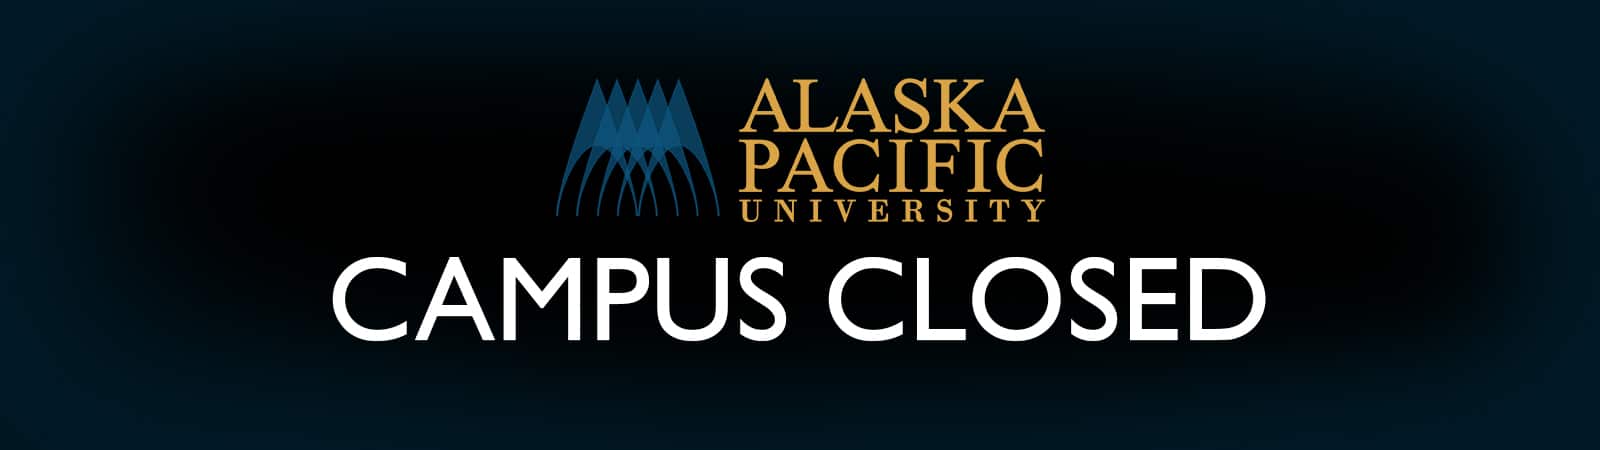 Campus-Closed-web-banner